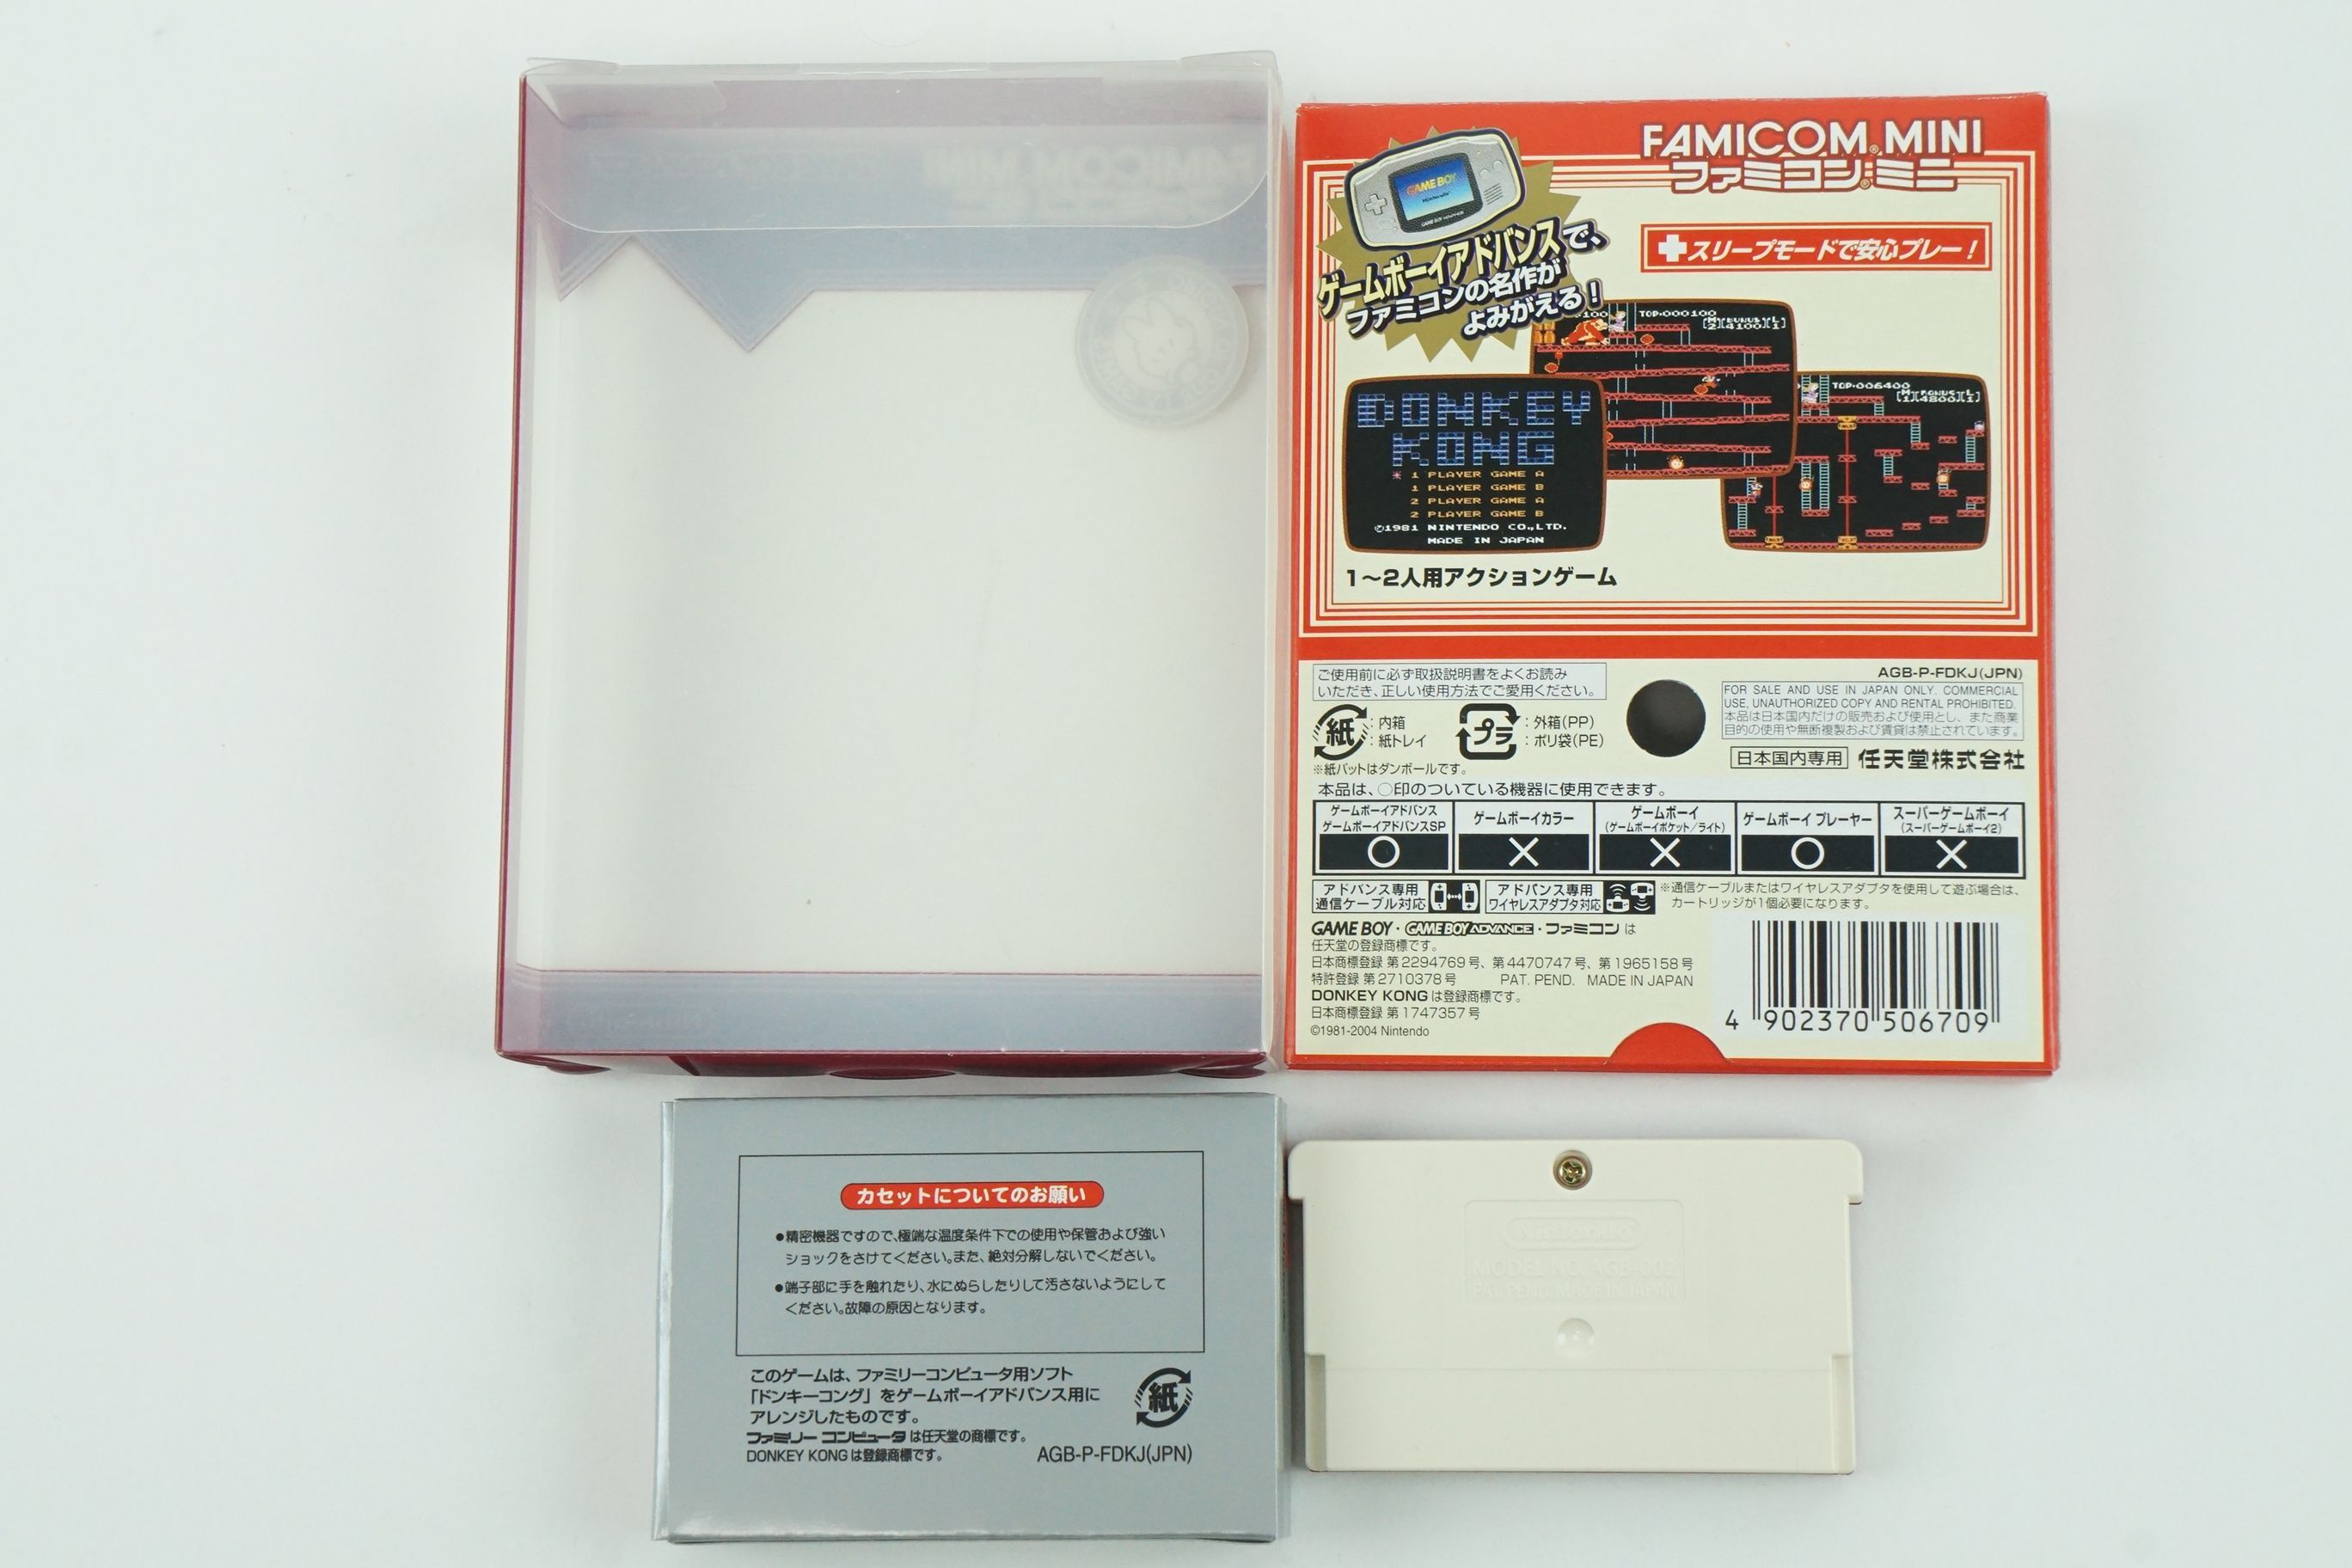 Donkey Kong Famicom Mini Gba Nintendo Gameboy Advance Box From Japan Ebay